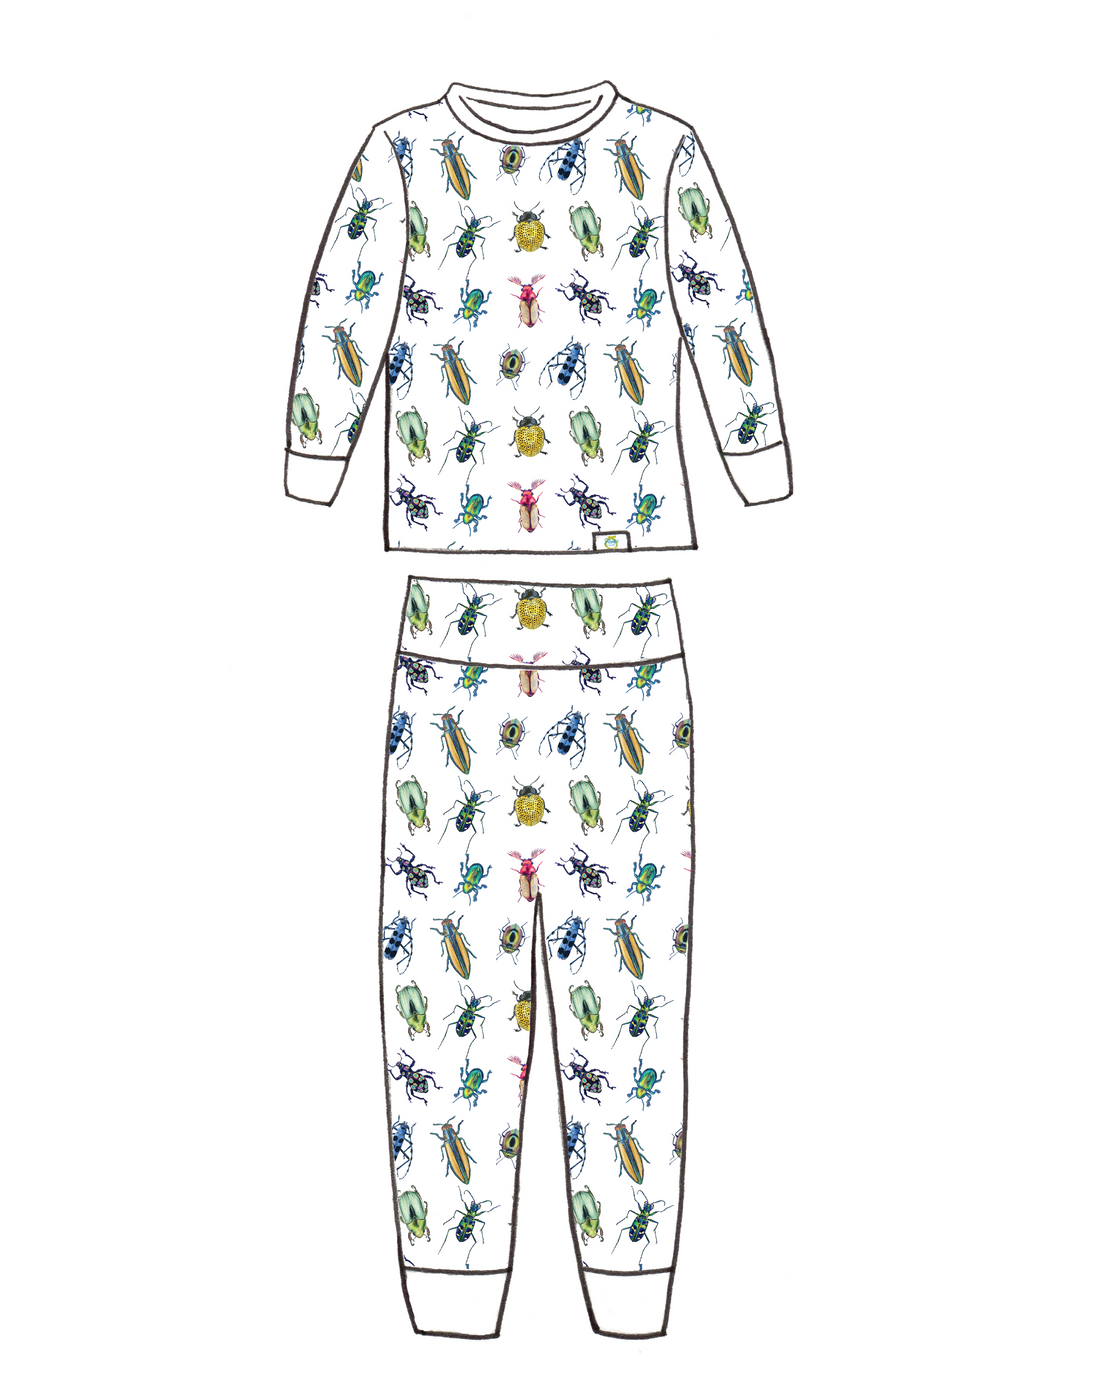 Preorder for Snug as Bug - Pajamas (Shipping October 1)